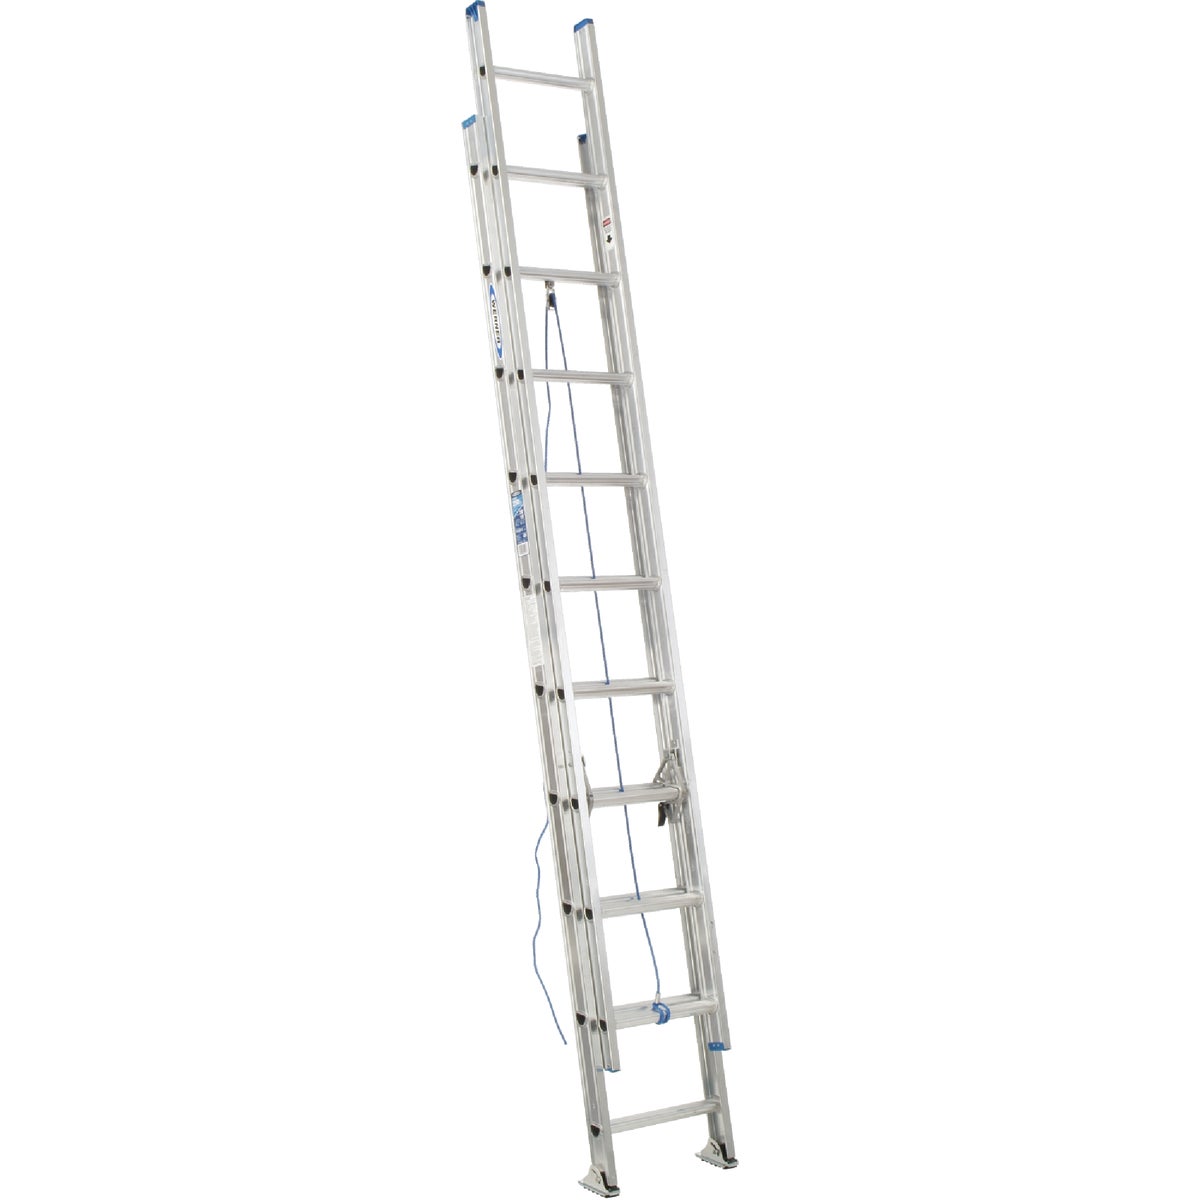 Item 793490, Heavy-duty industrial extension ladder.